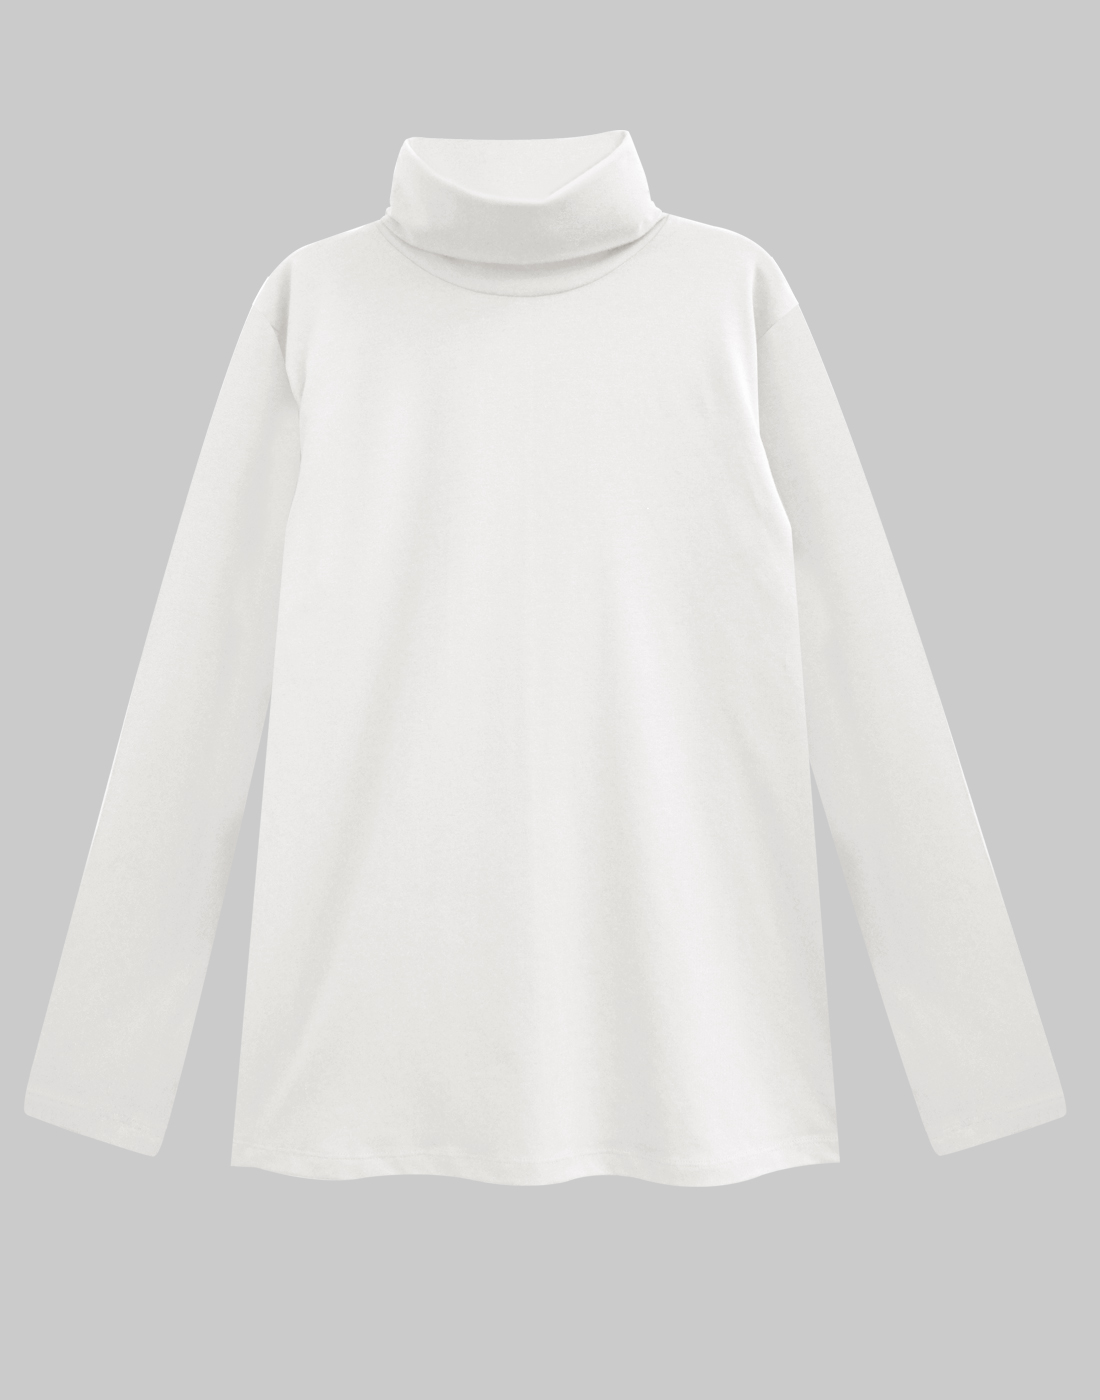 White Turtleneck Full Sleeve T-shirt - A.T.U.N.